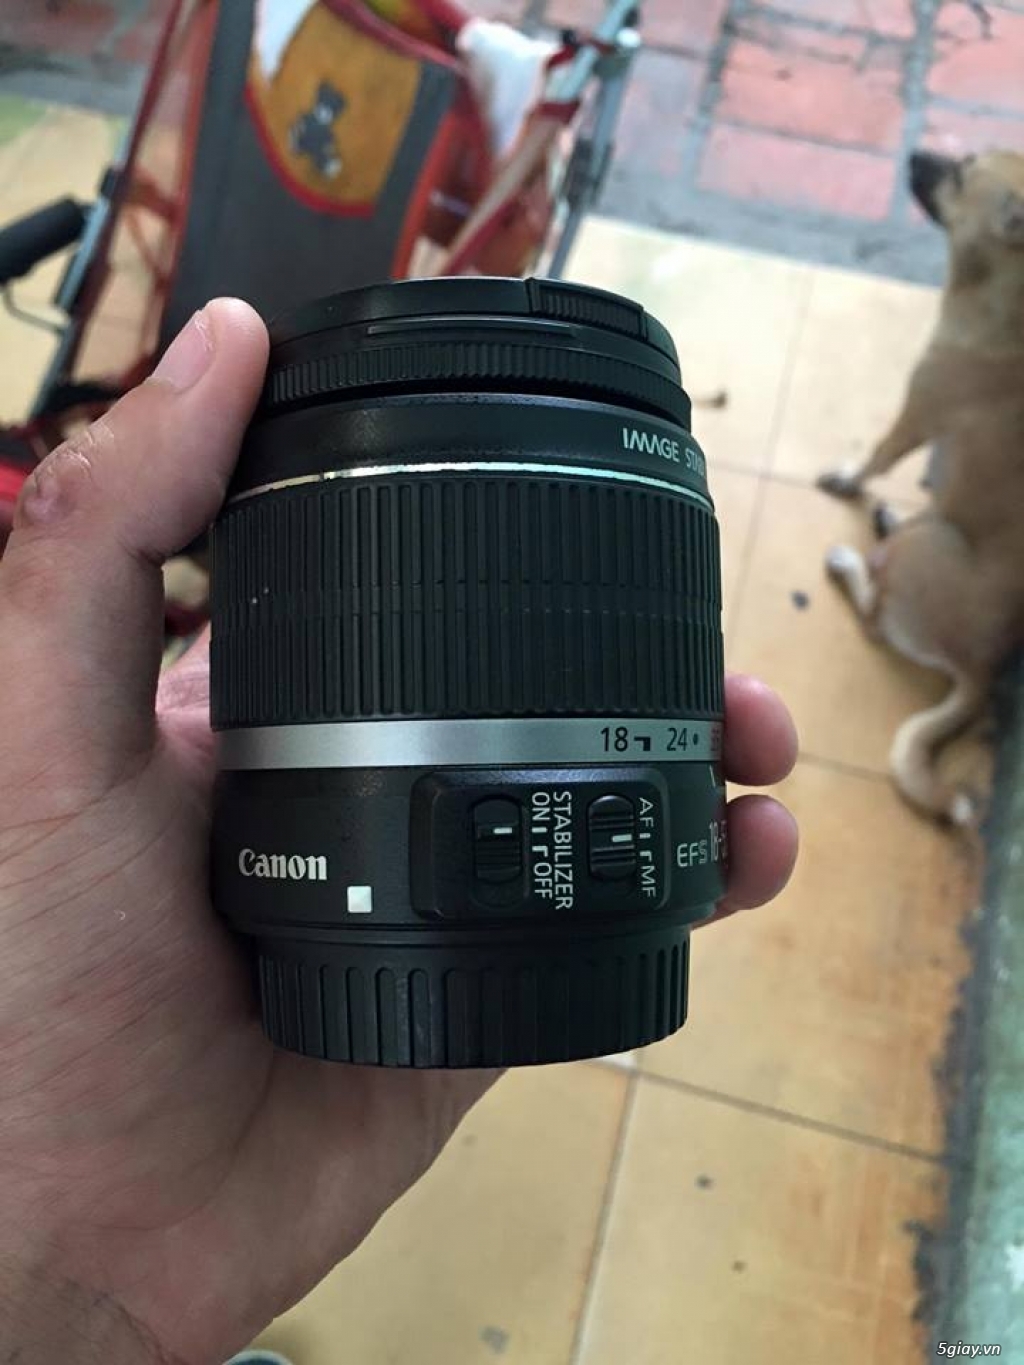 cần bán cái lens canon EFS 18-55mm 0.25m/0.8ft giá rẻ đây - 3